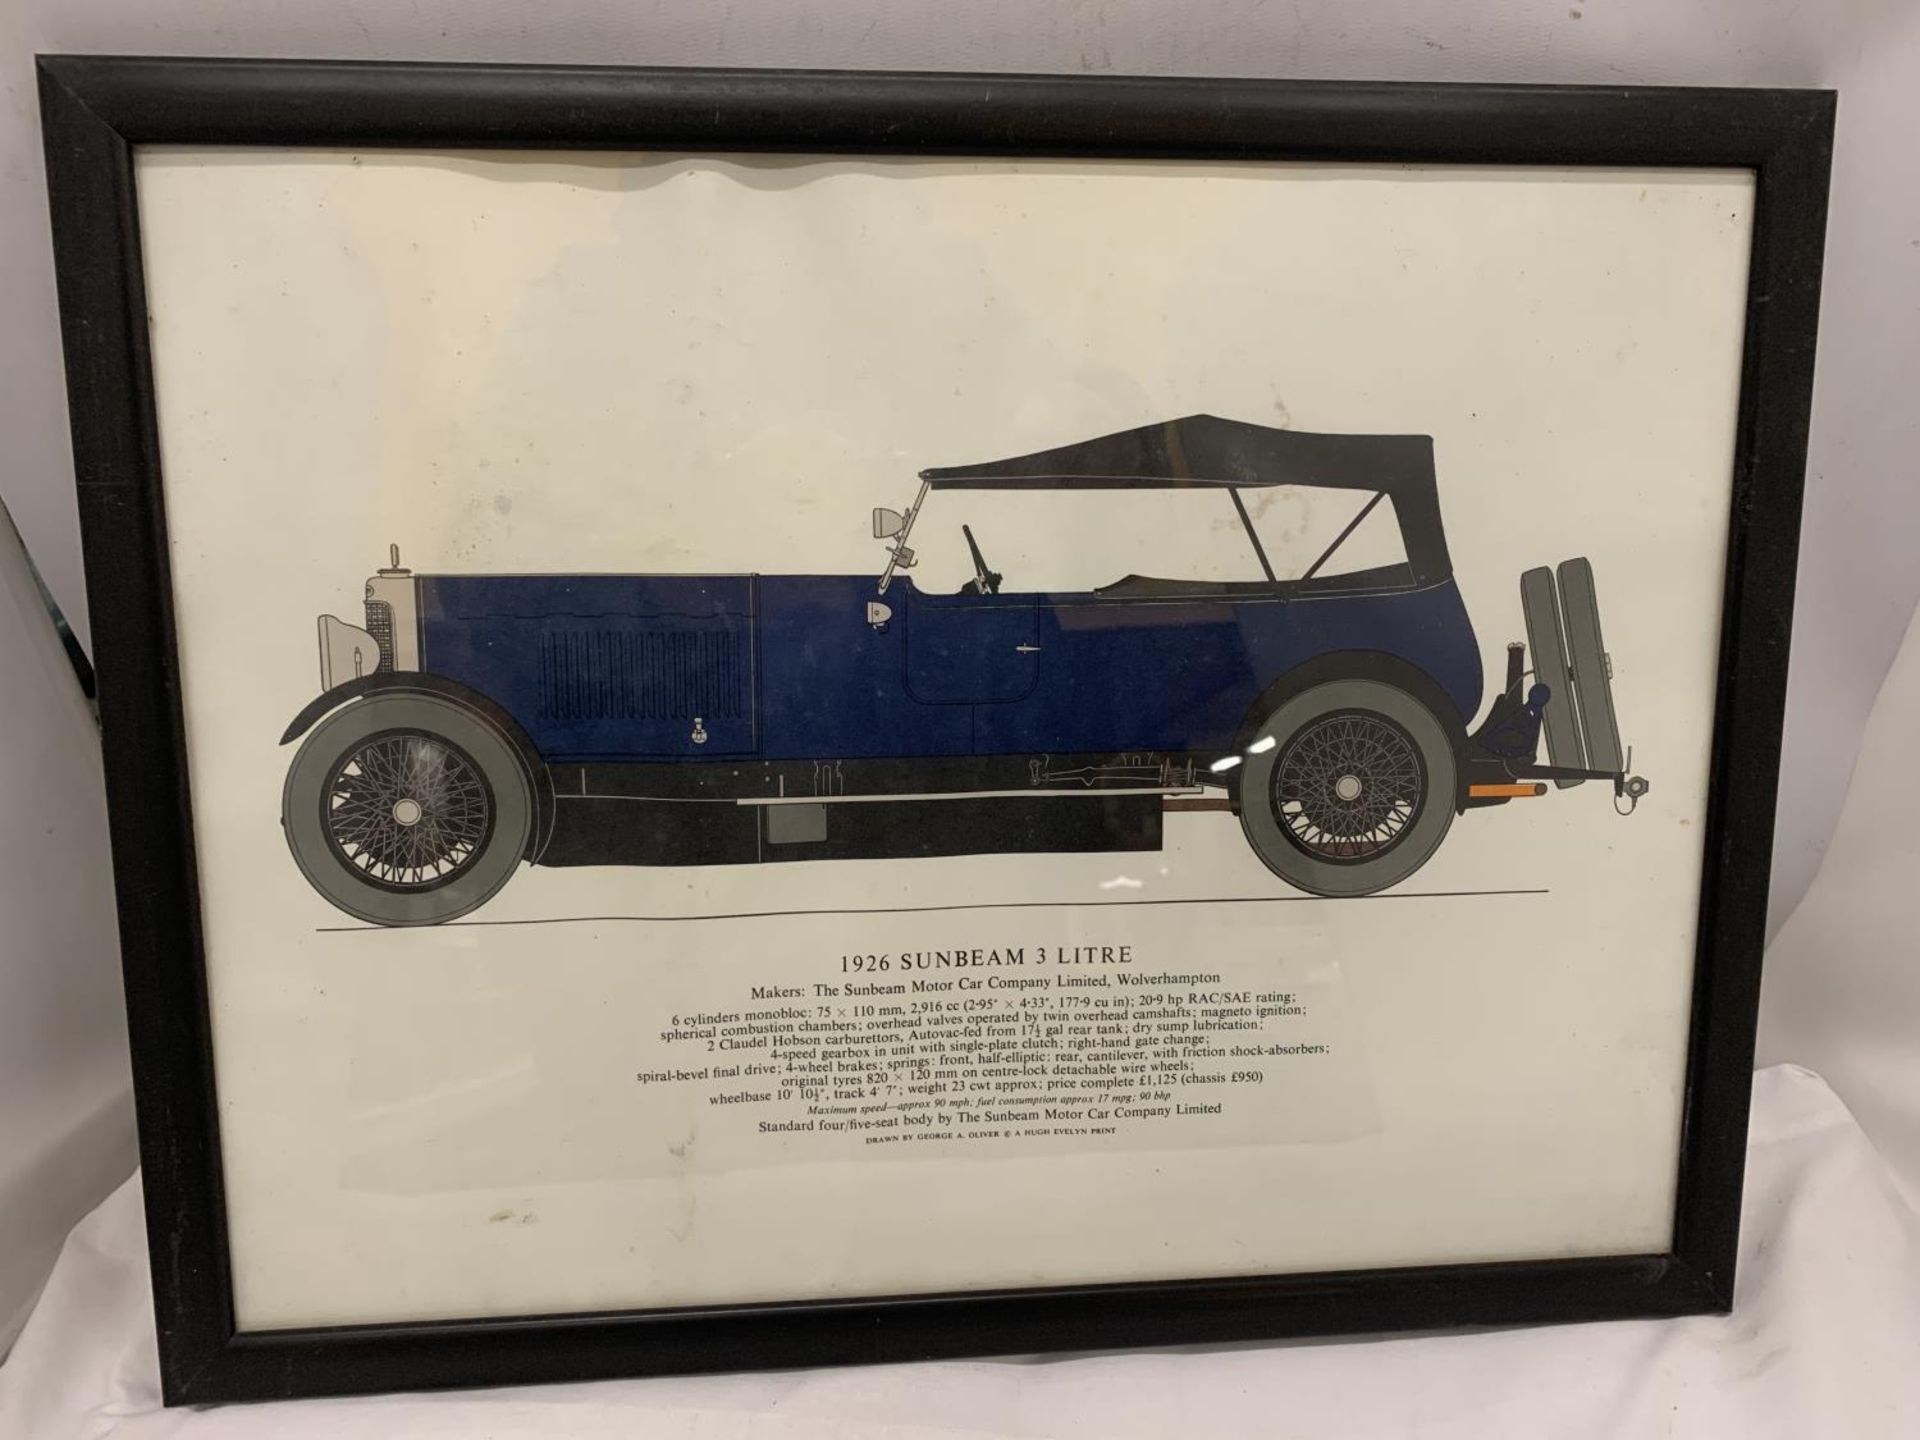 SIX FRAMED PRINTS OF VINTAGE CARS TO INCLUDE A 1930 AUSTIN 7 'ULSTER', 1926 SUNBEAM 3 LITRE, ETC - Bild 2 aus 7